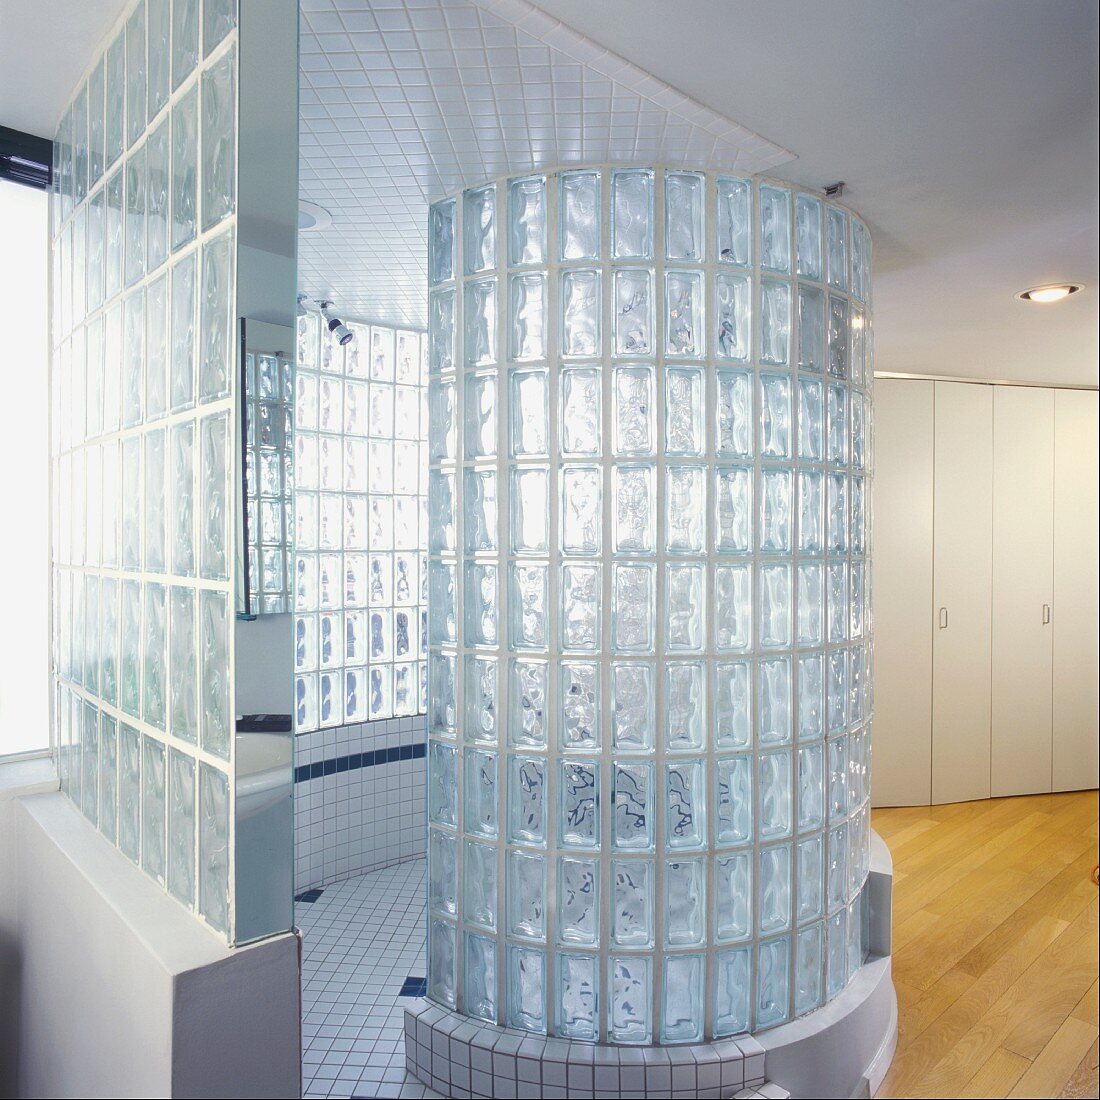 Glass brick cylinder in modern bathroom